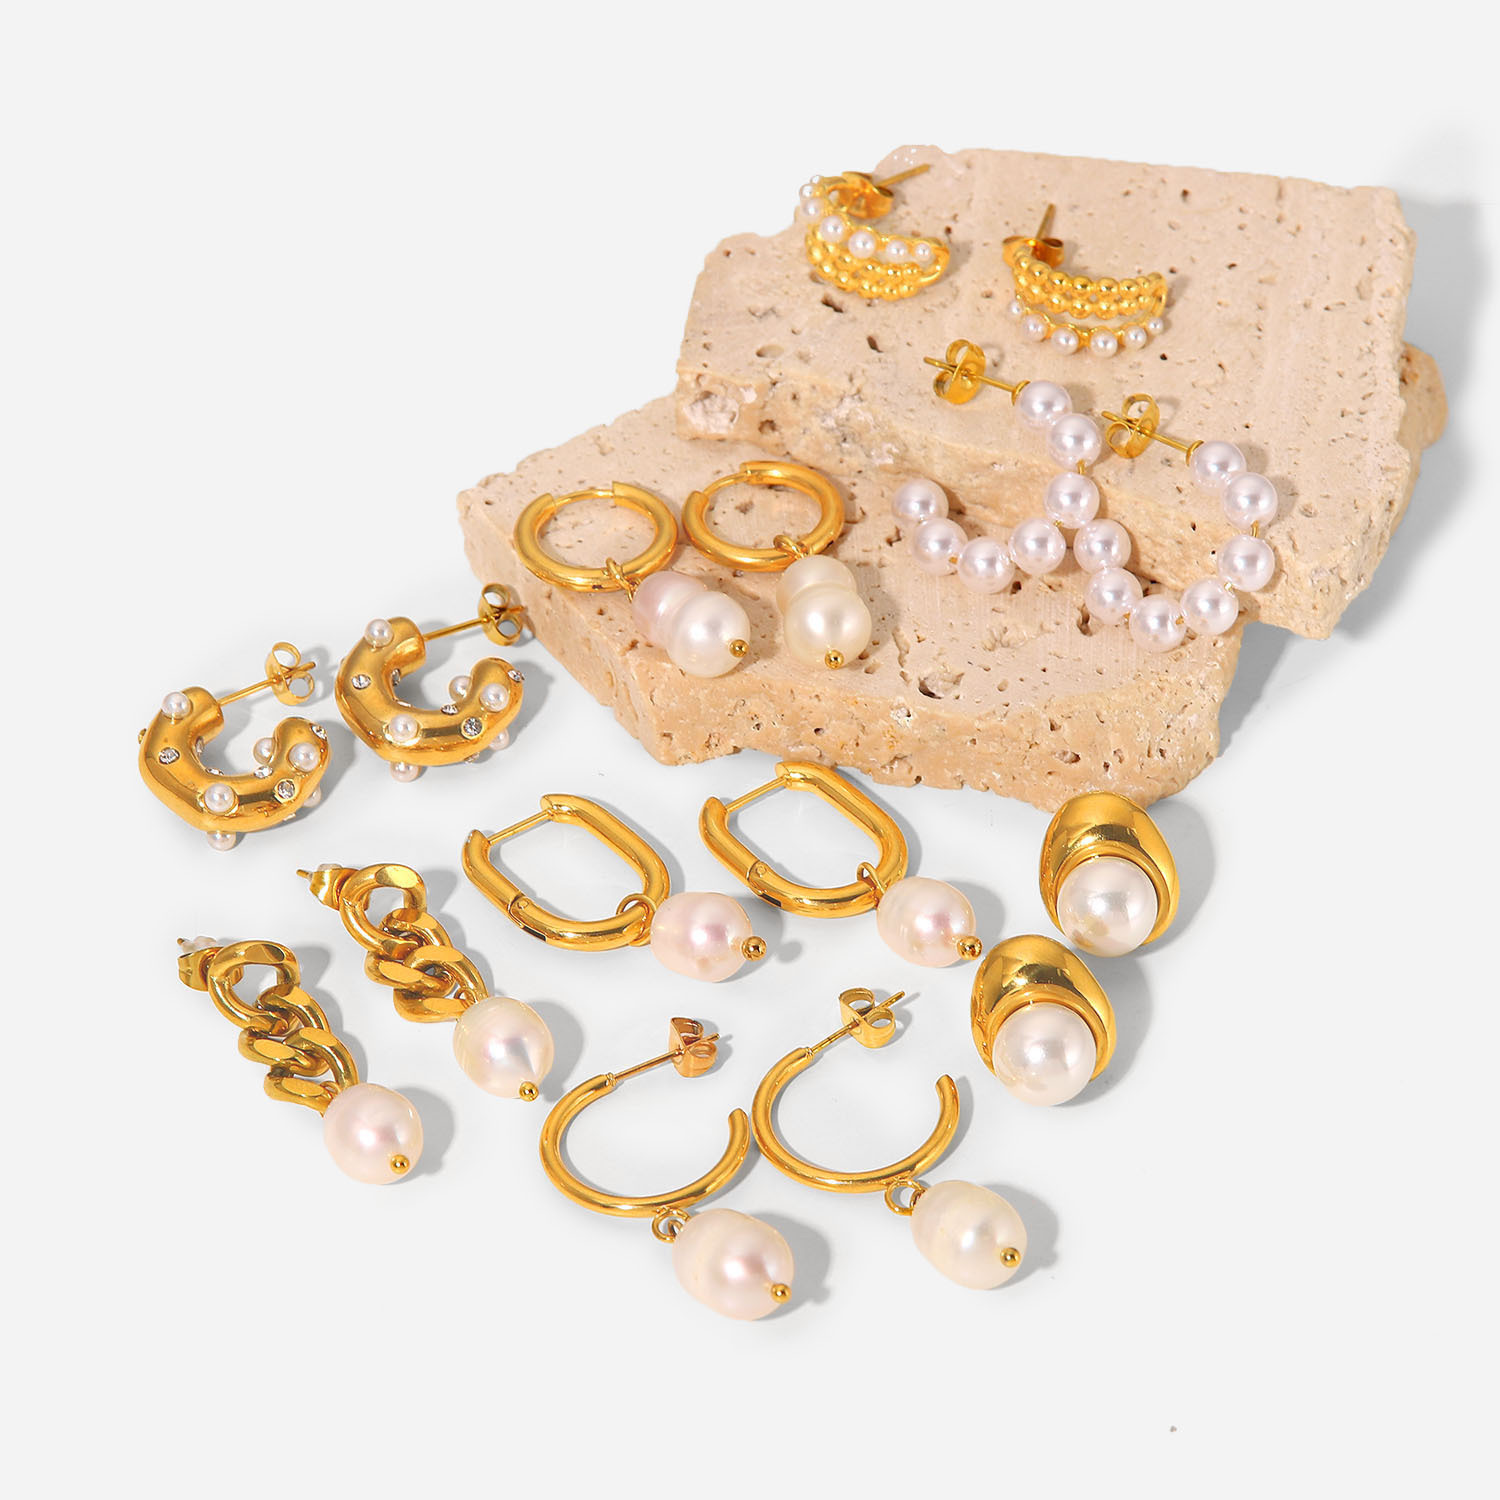 18K Gold Stainless Pearl Hoop Earrings - Trendy Instagram-Inspired Women's Fashion Accessory